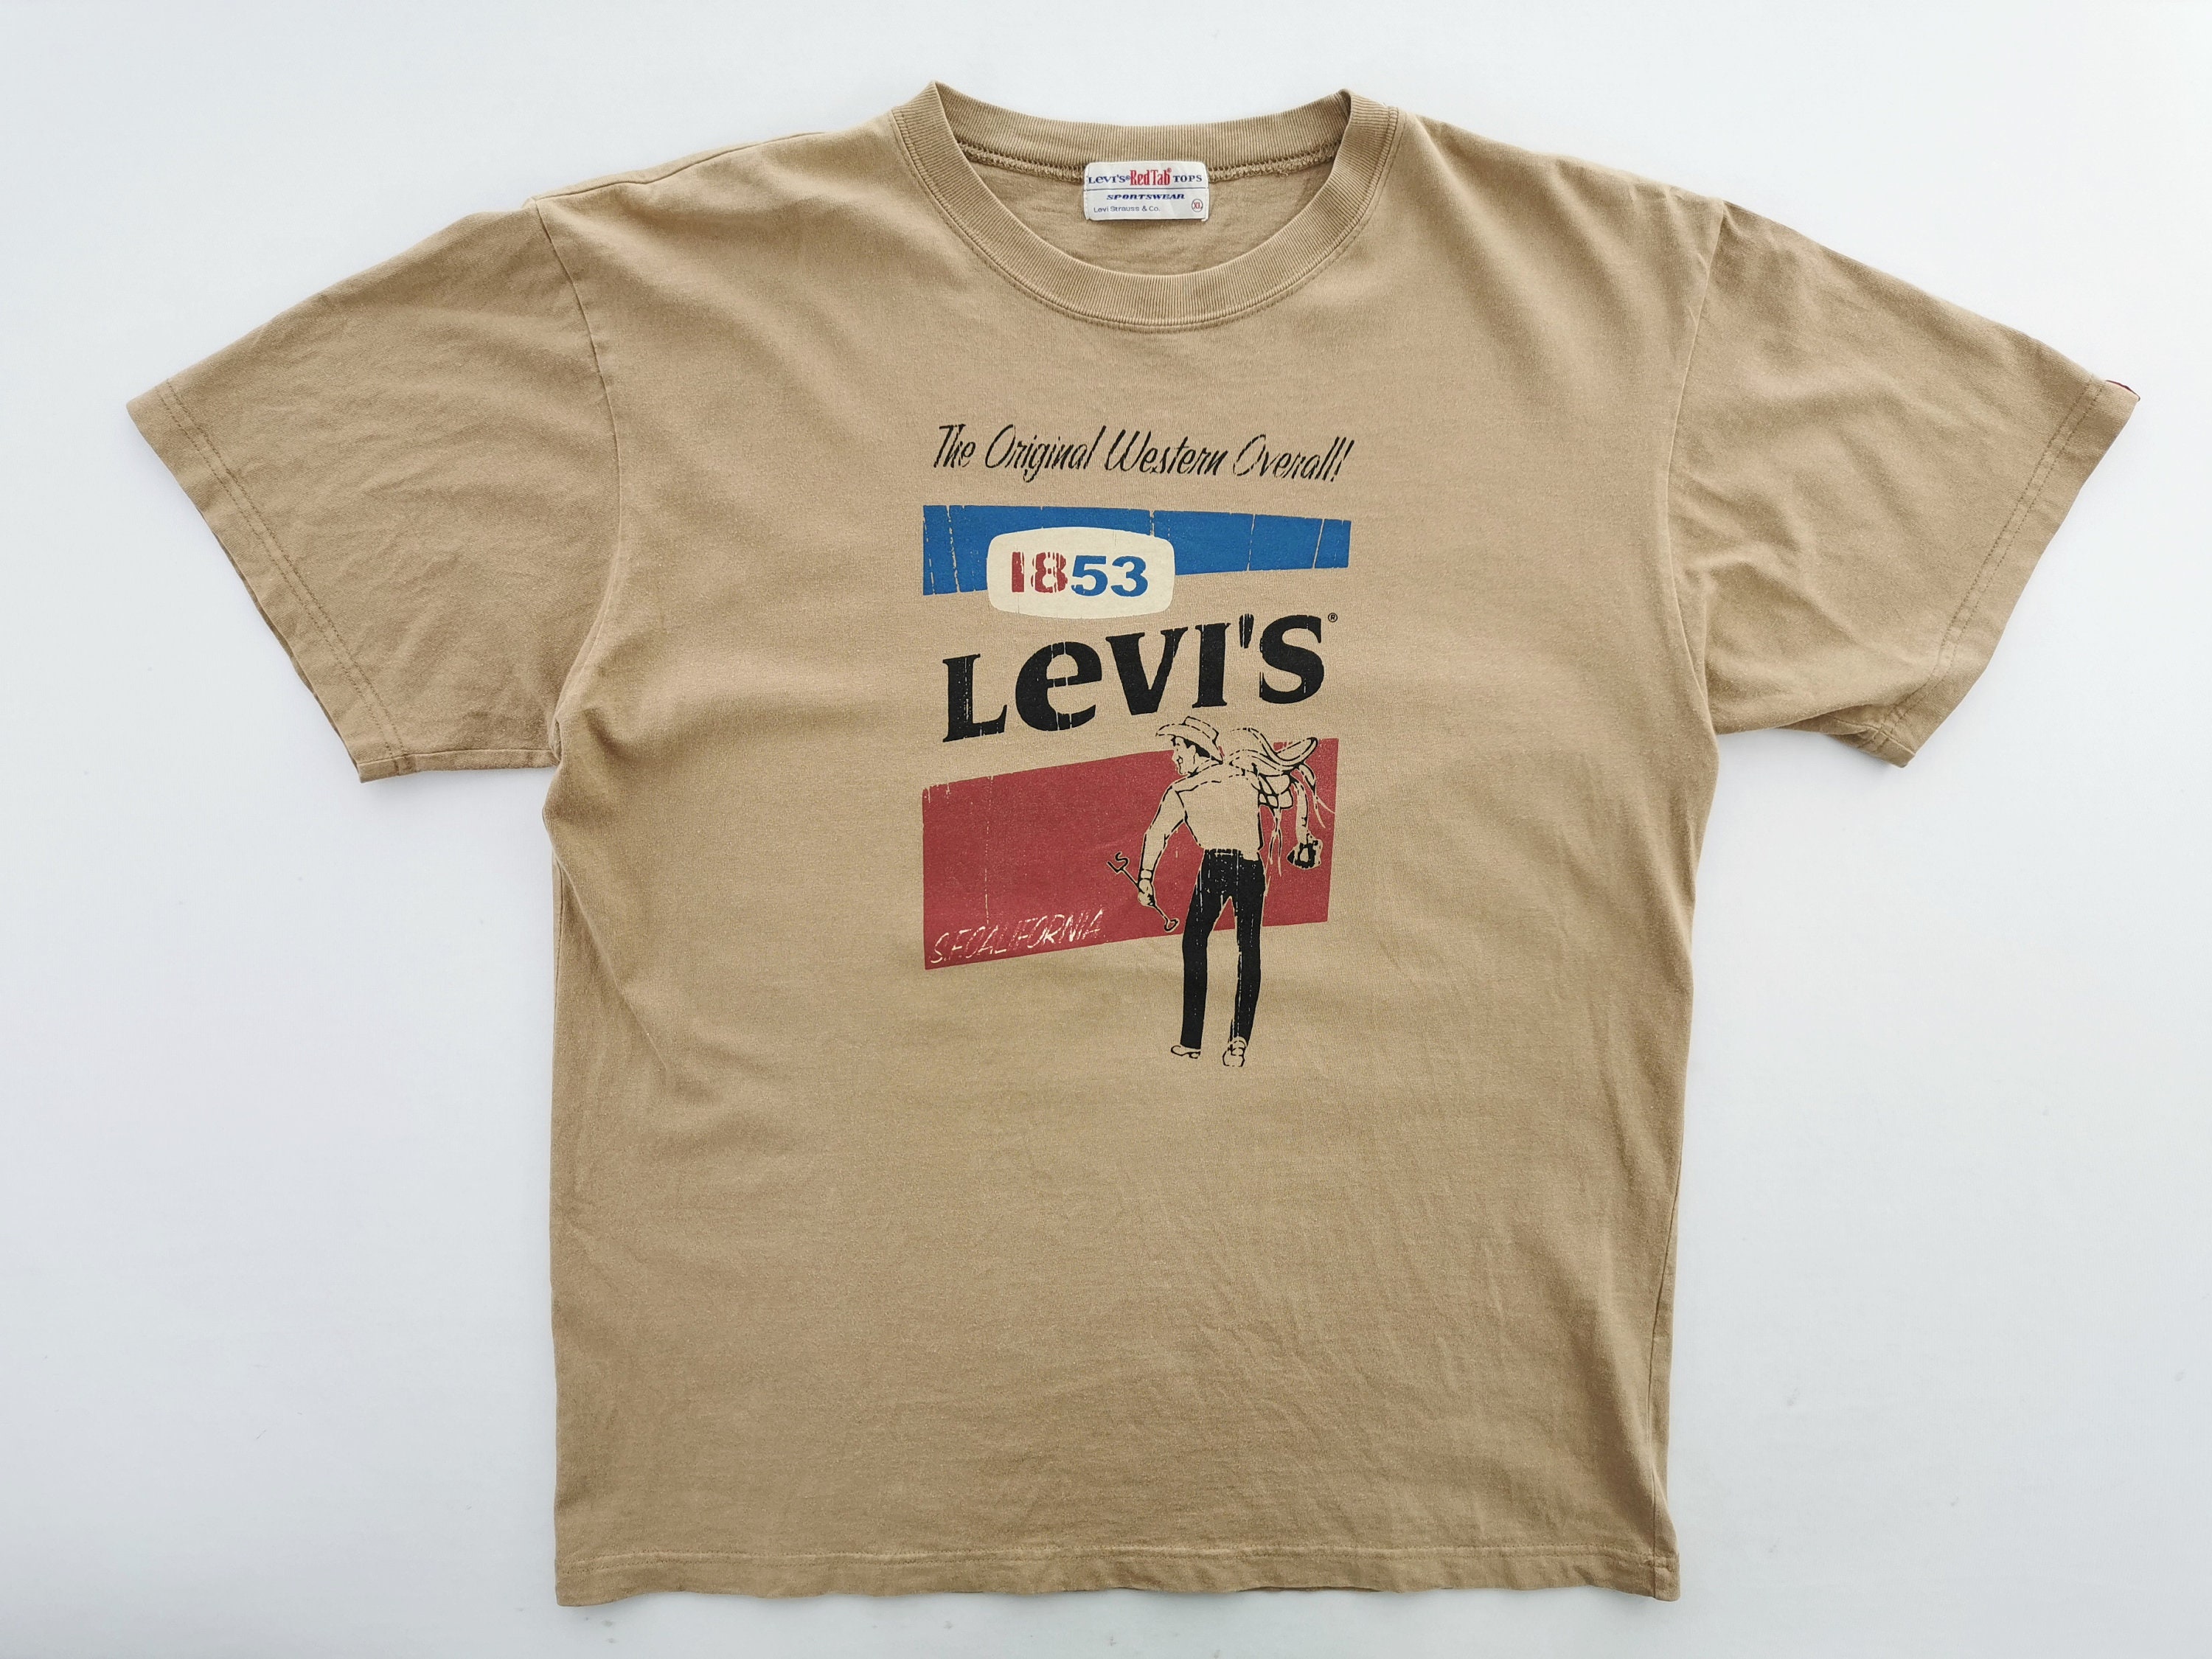 Levi's Vintage clothing T-shirt L